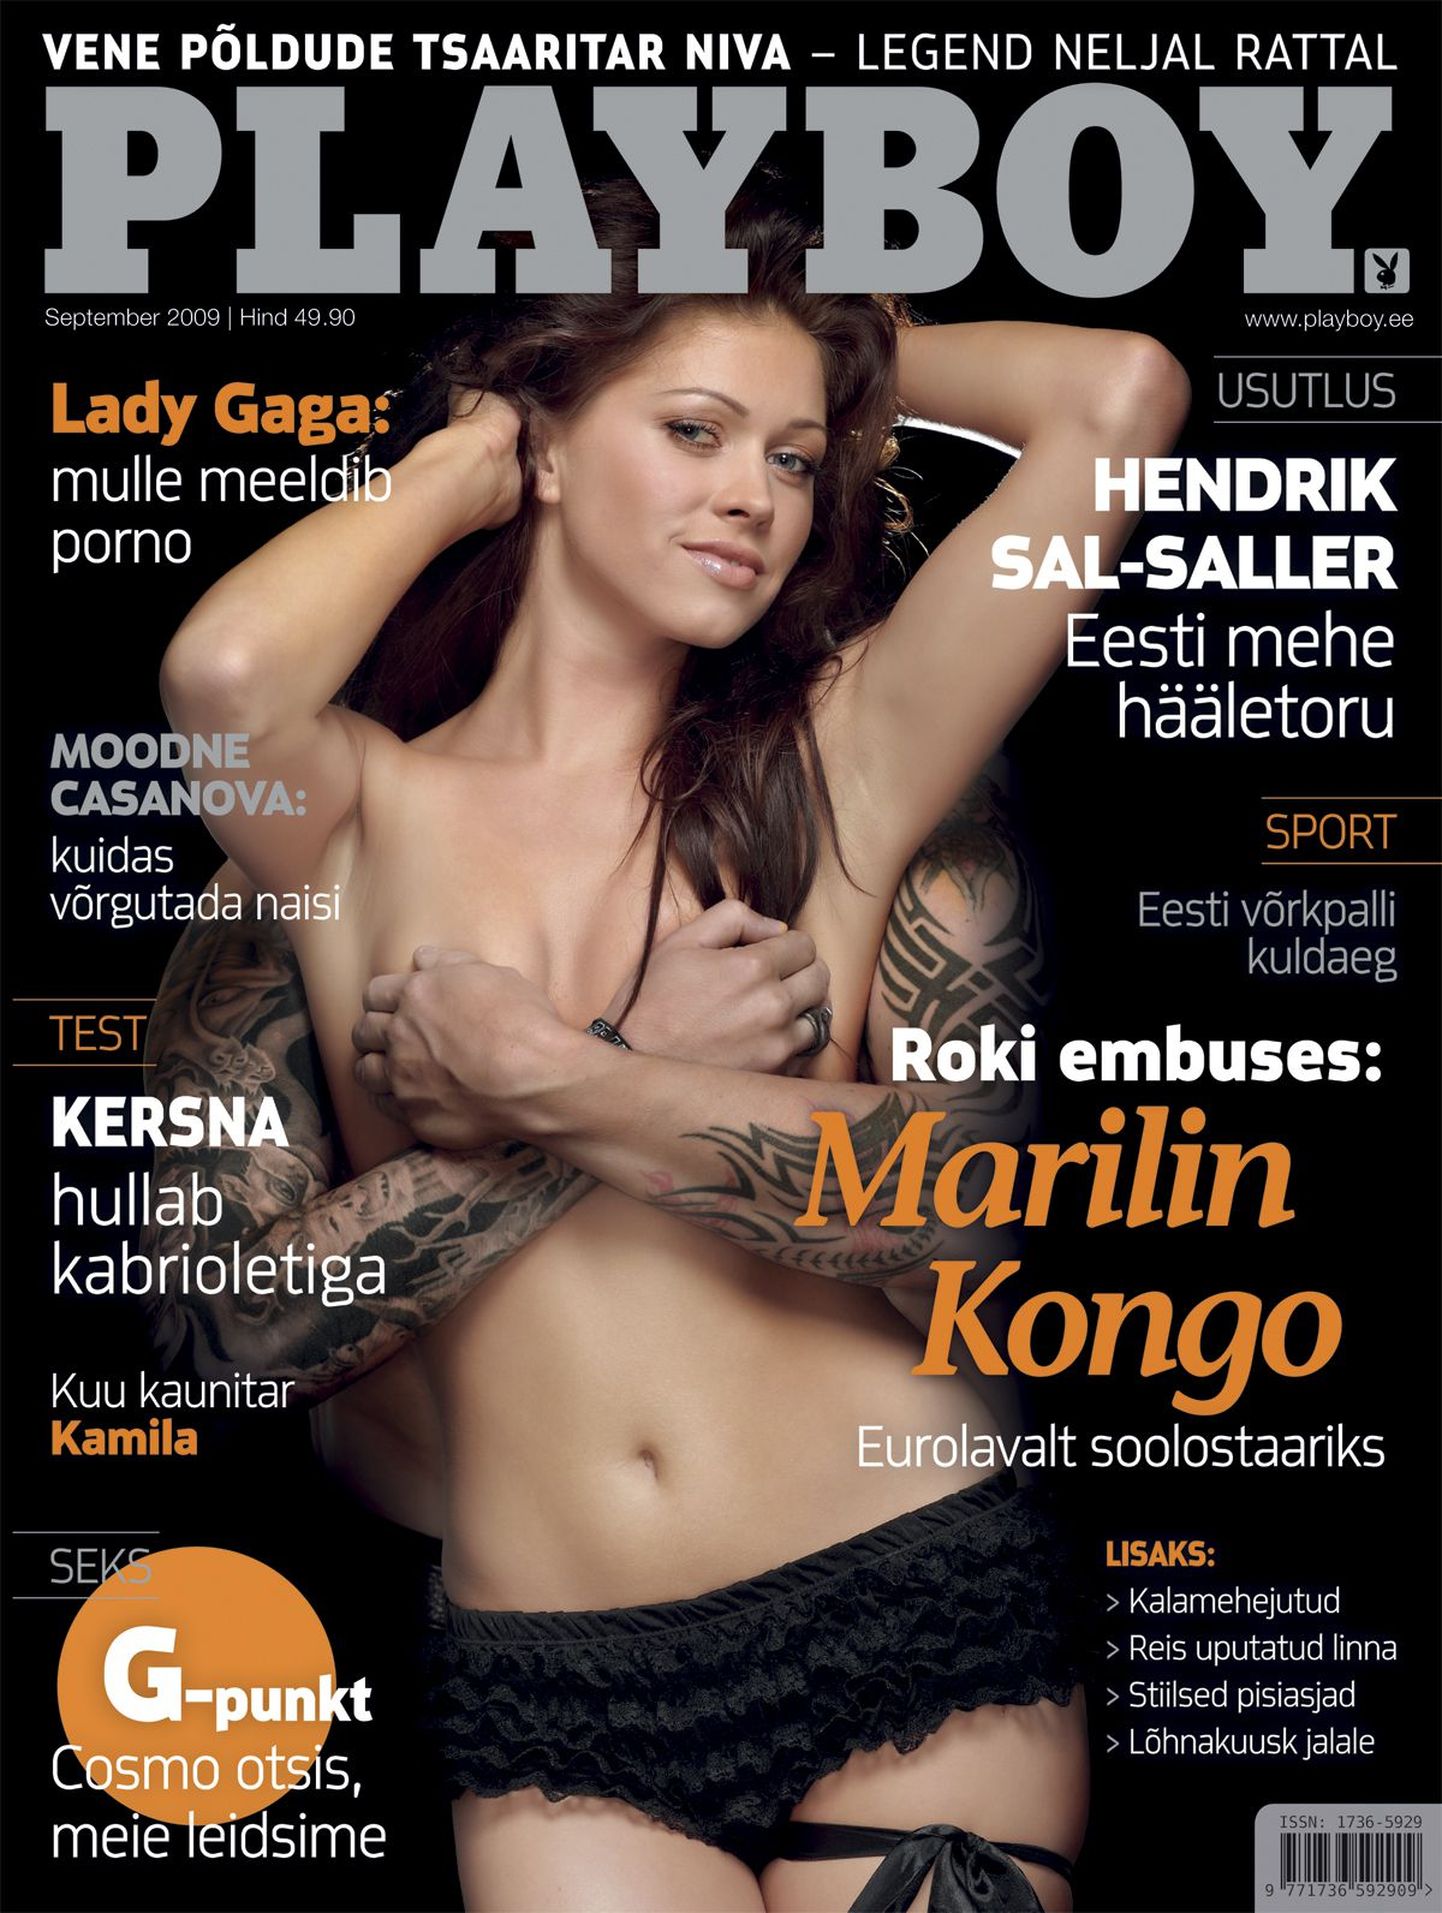 Marilin Kongo septembrikuu Playboy kaanel